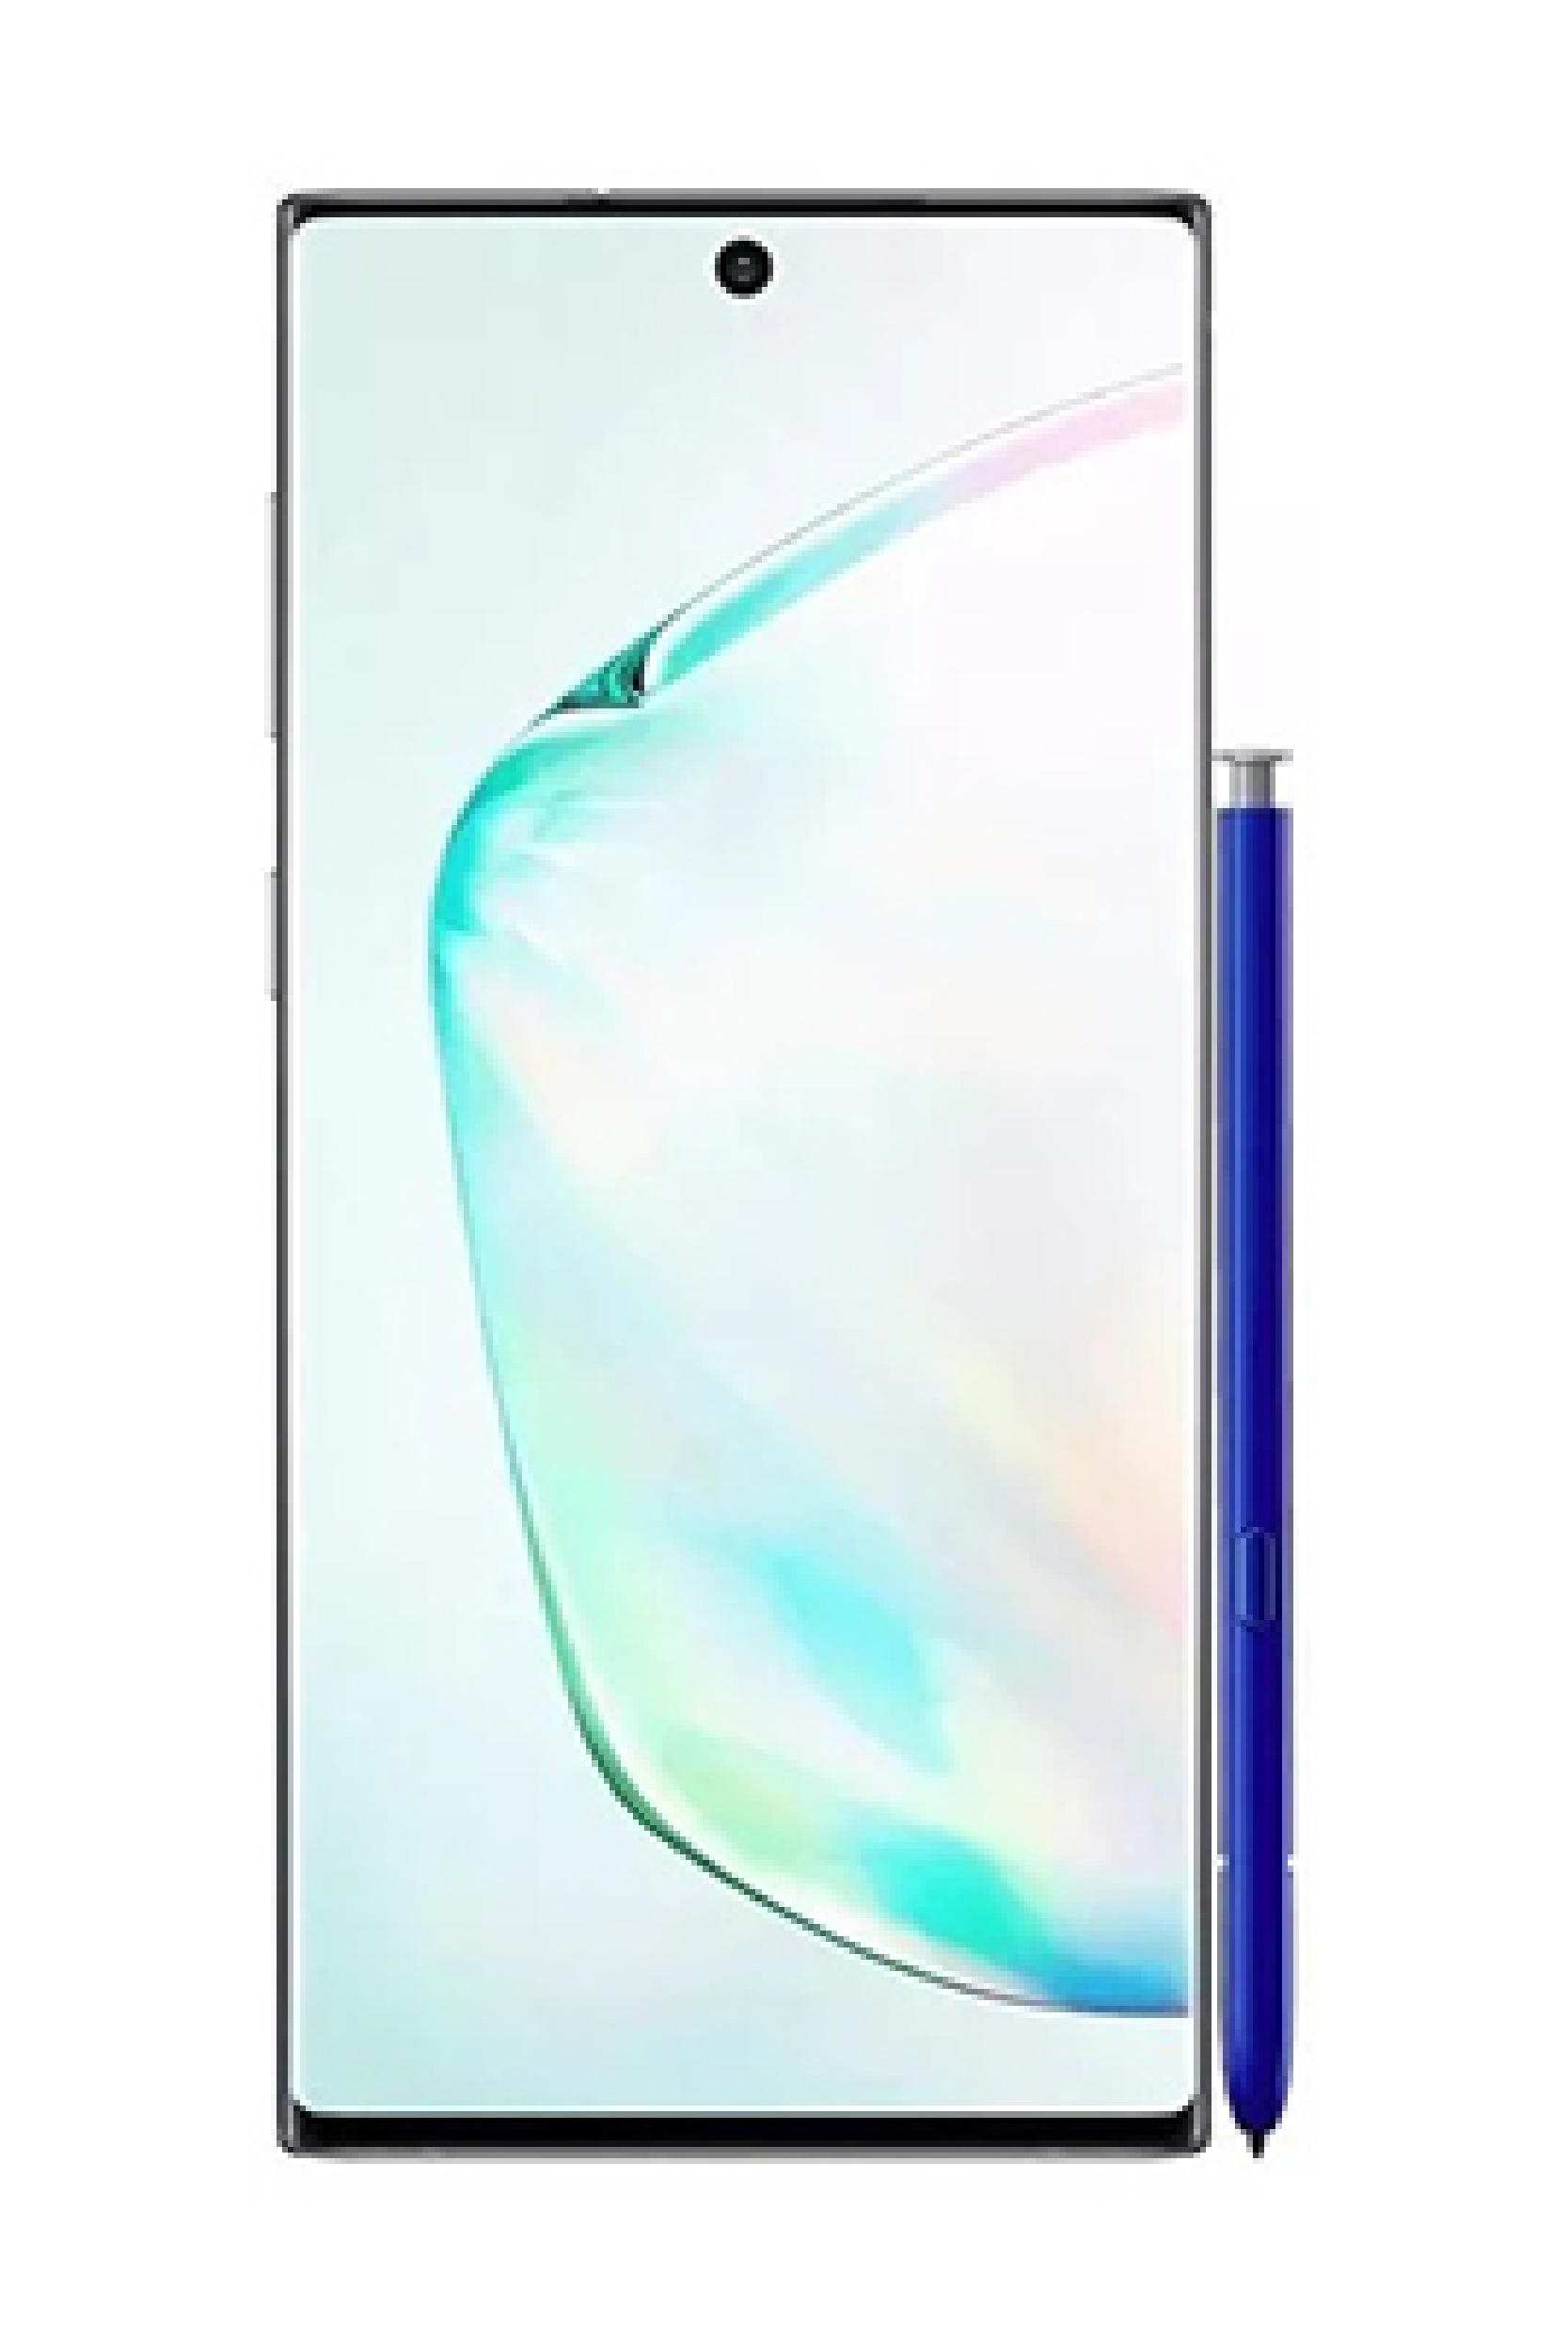 Samsung Galaxy Note 10 5G Price in Pakistan & Specs